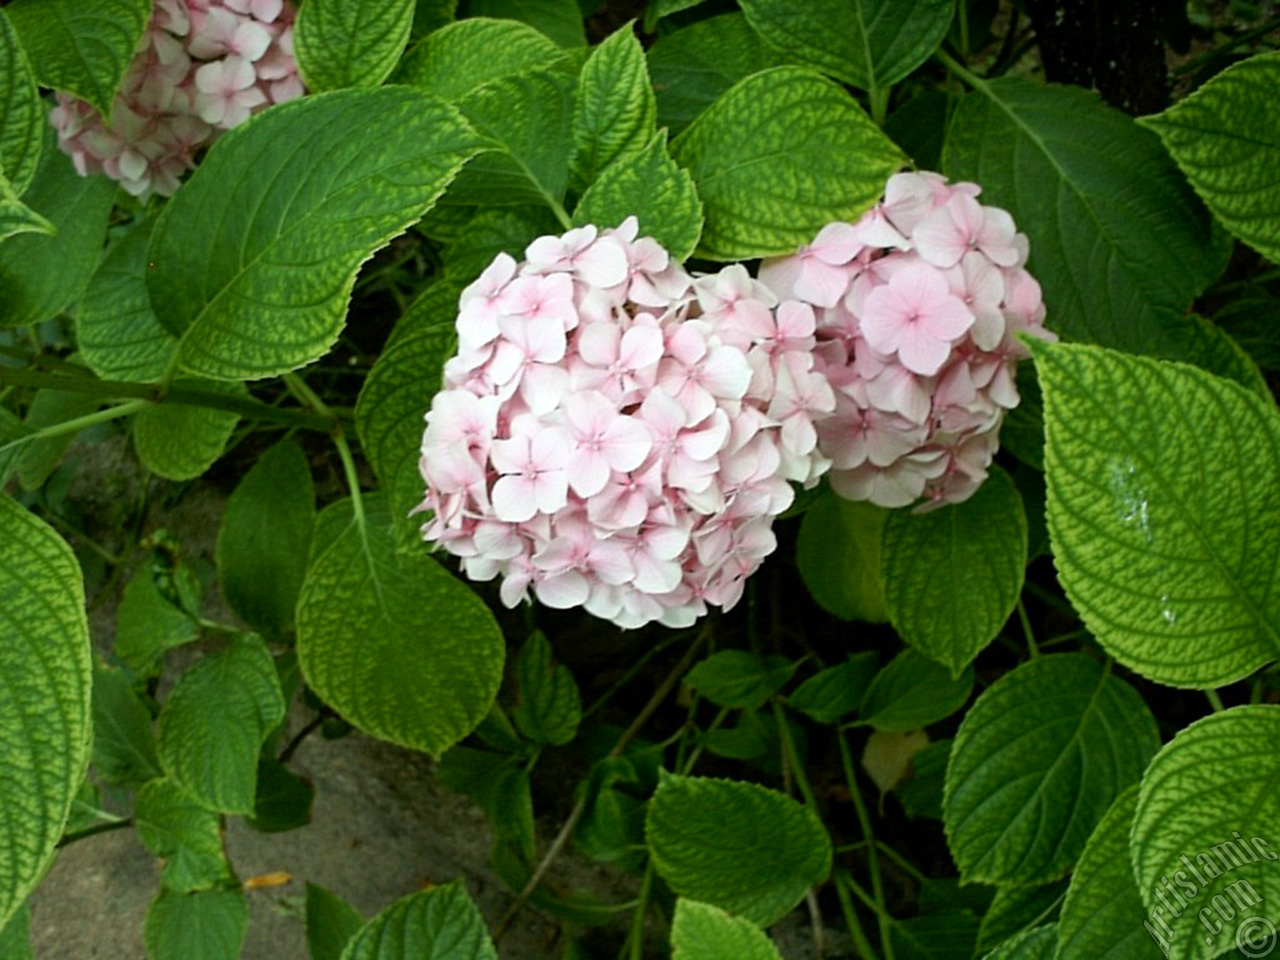 Pink Hydrangea -Hortensia- flower.
